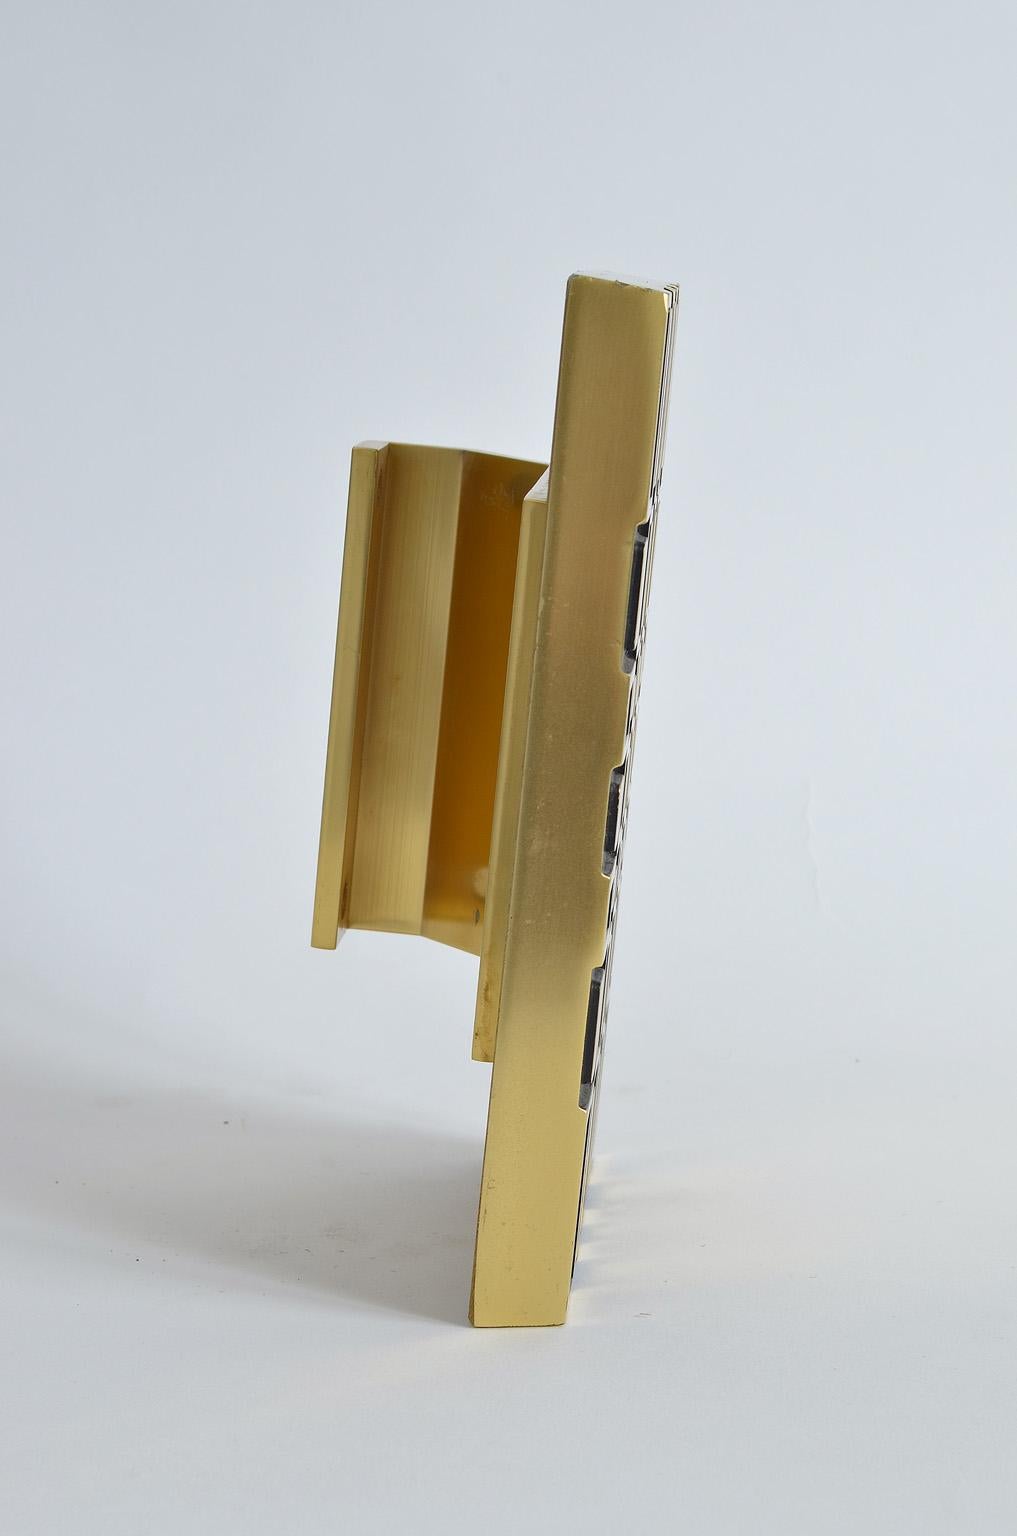 German Pair of Midcentury Brass Door Handles Geometric Gold and Black Design, 1970s For Sale